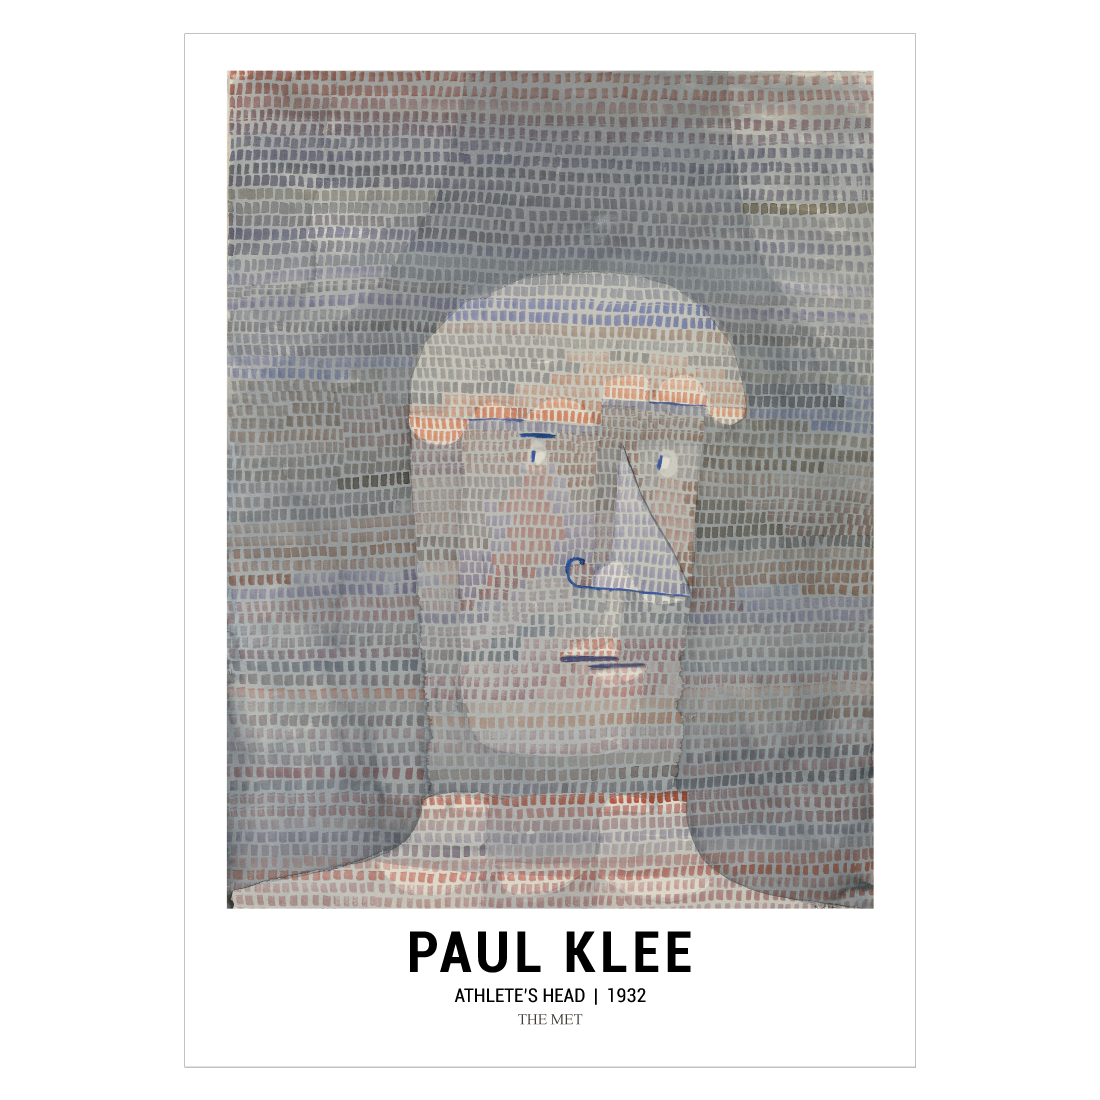 Kunstplakat med Paul Klee "Athlete's Head"